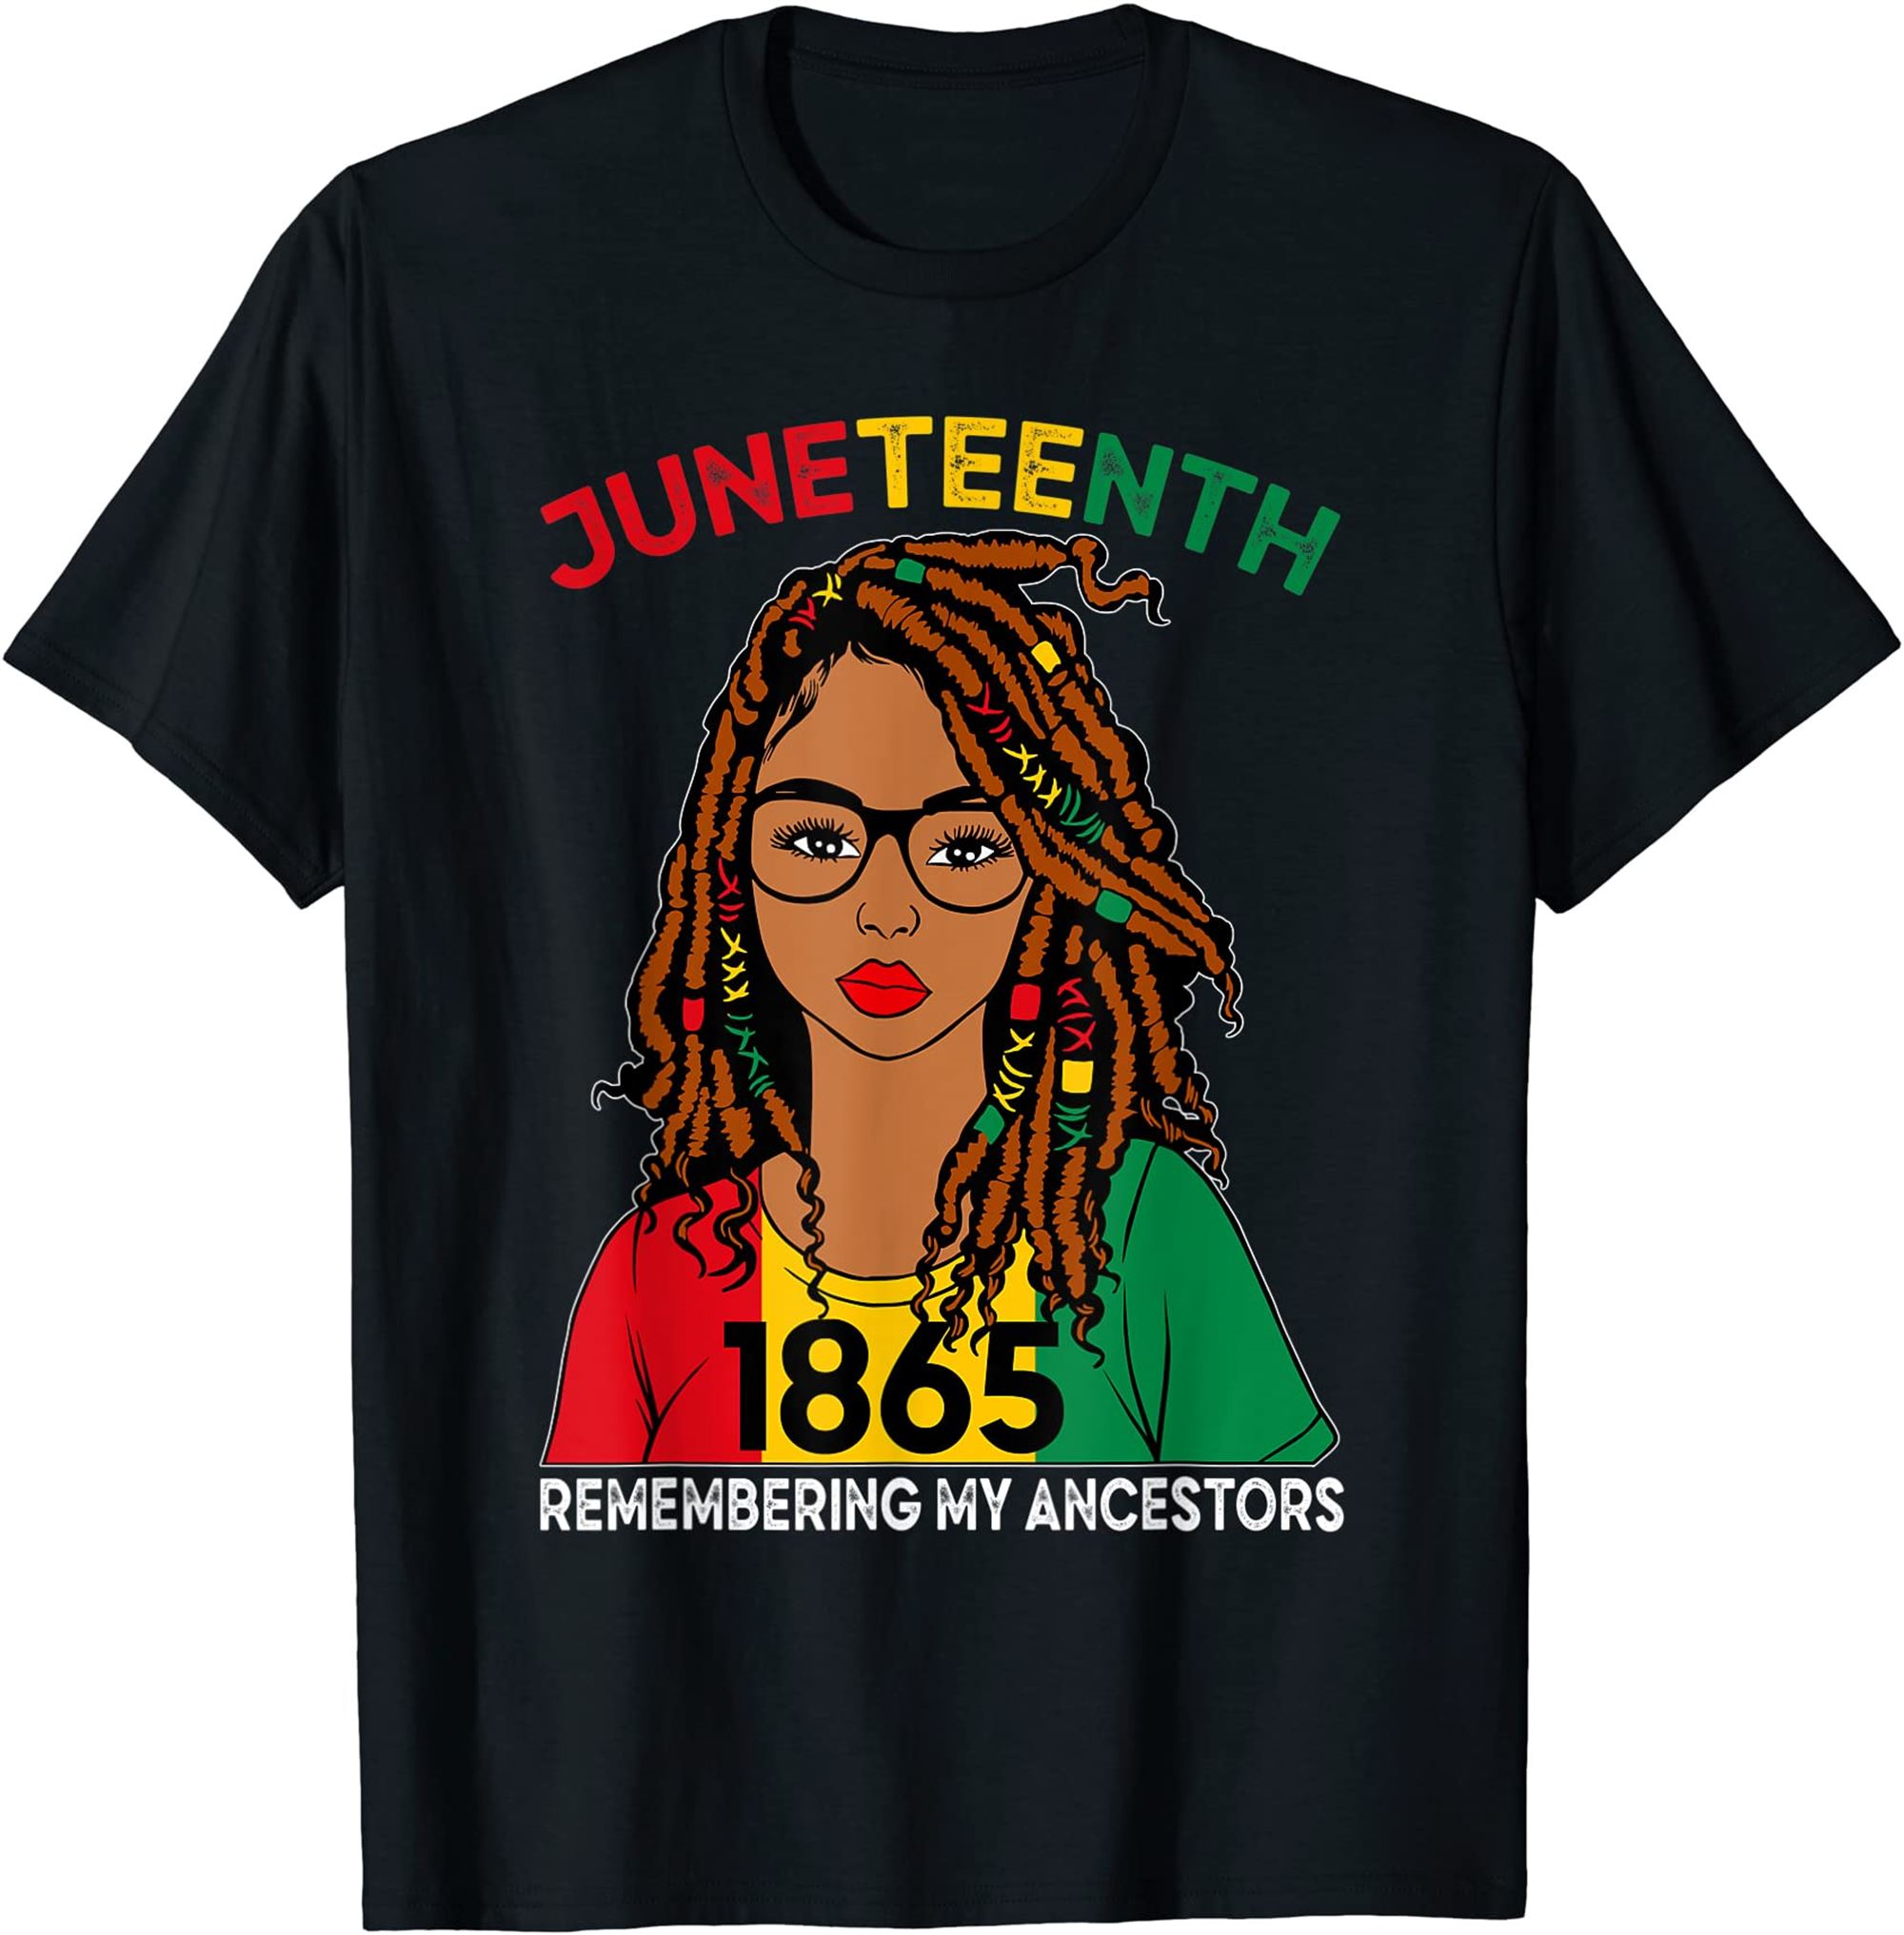 Locd Hair Black Women Remebering My Ancestors Juneteenth T-shirt Size Up To 5xl